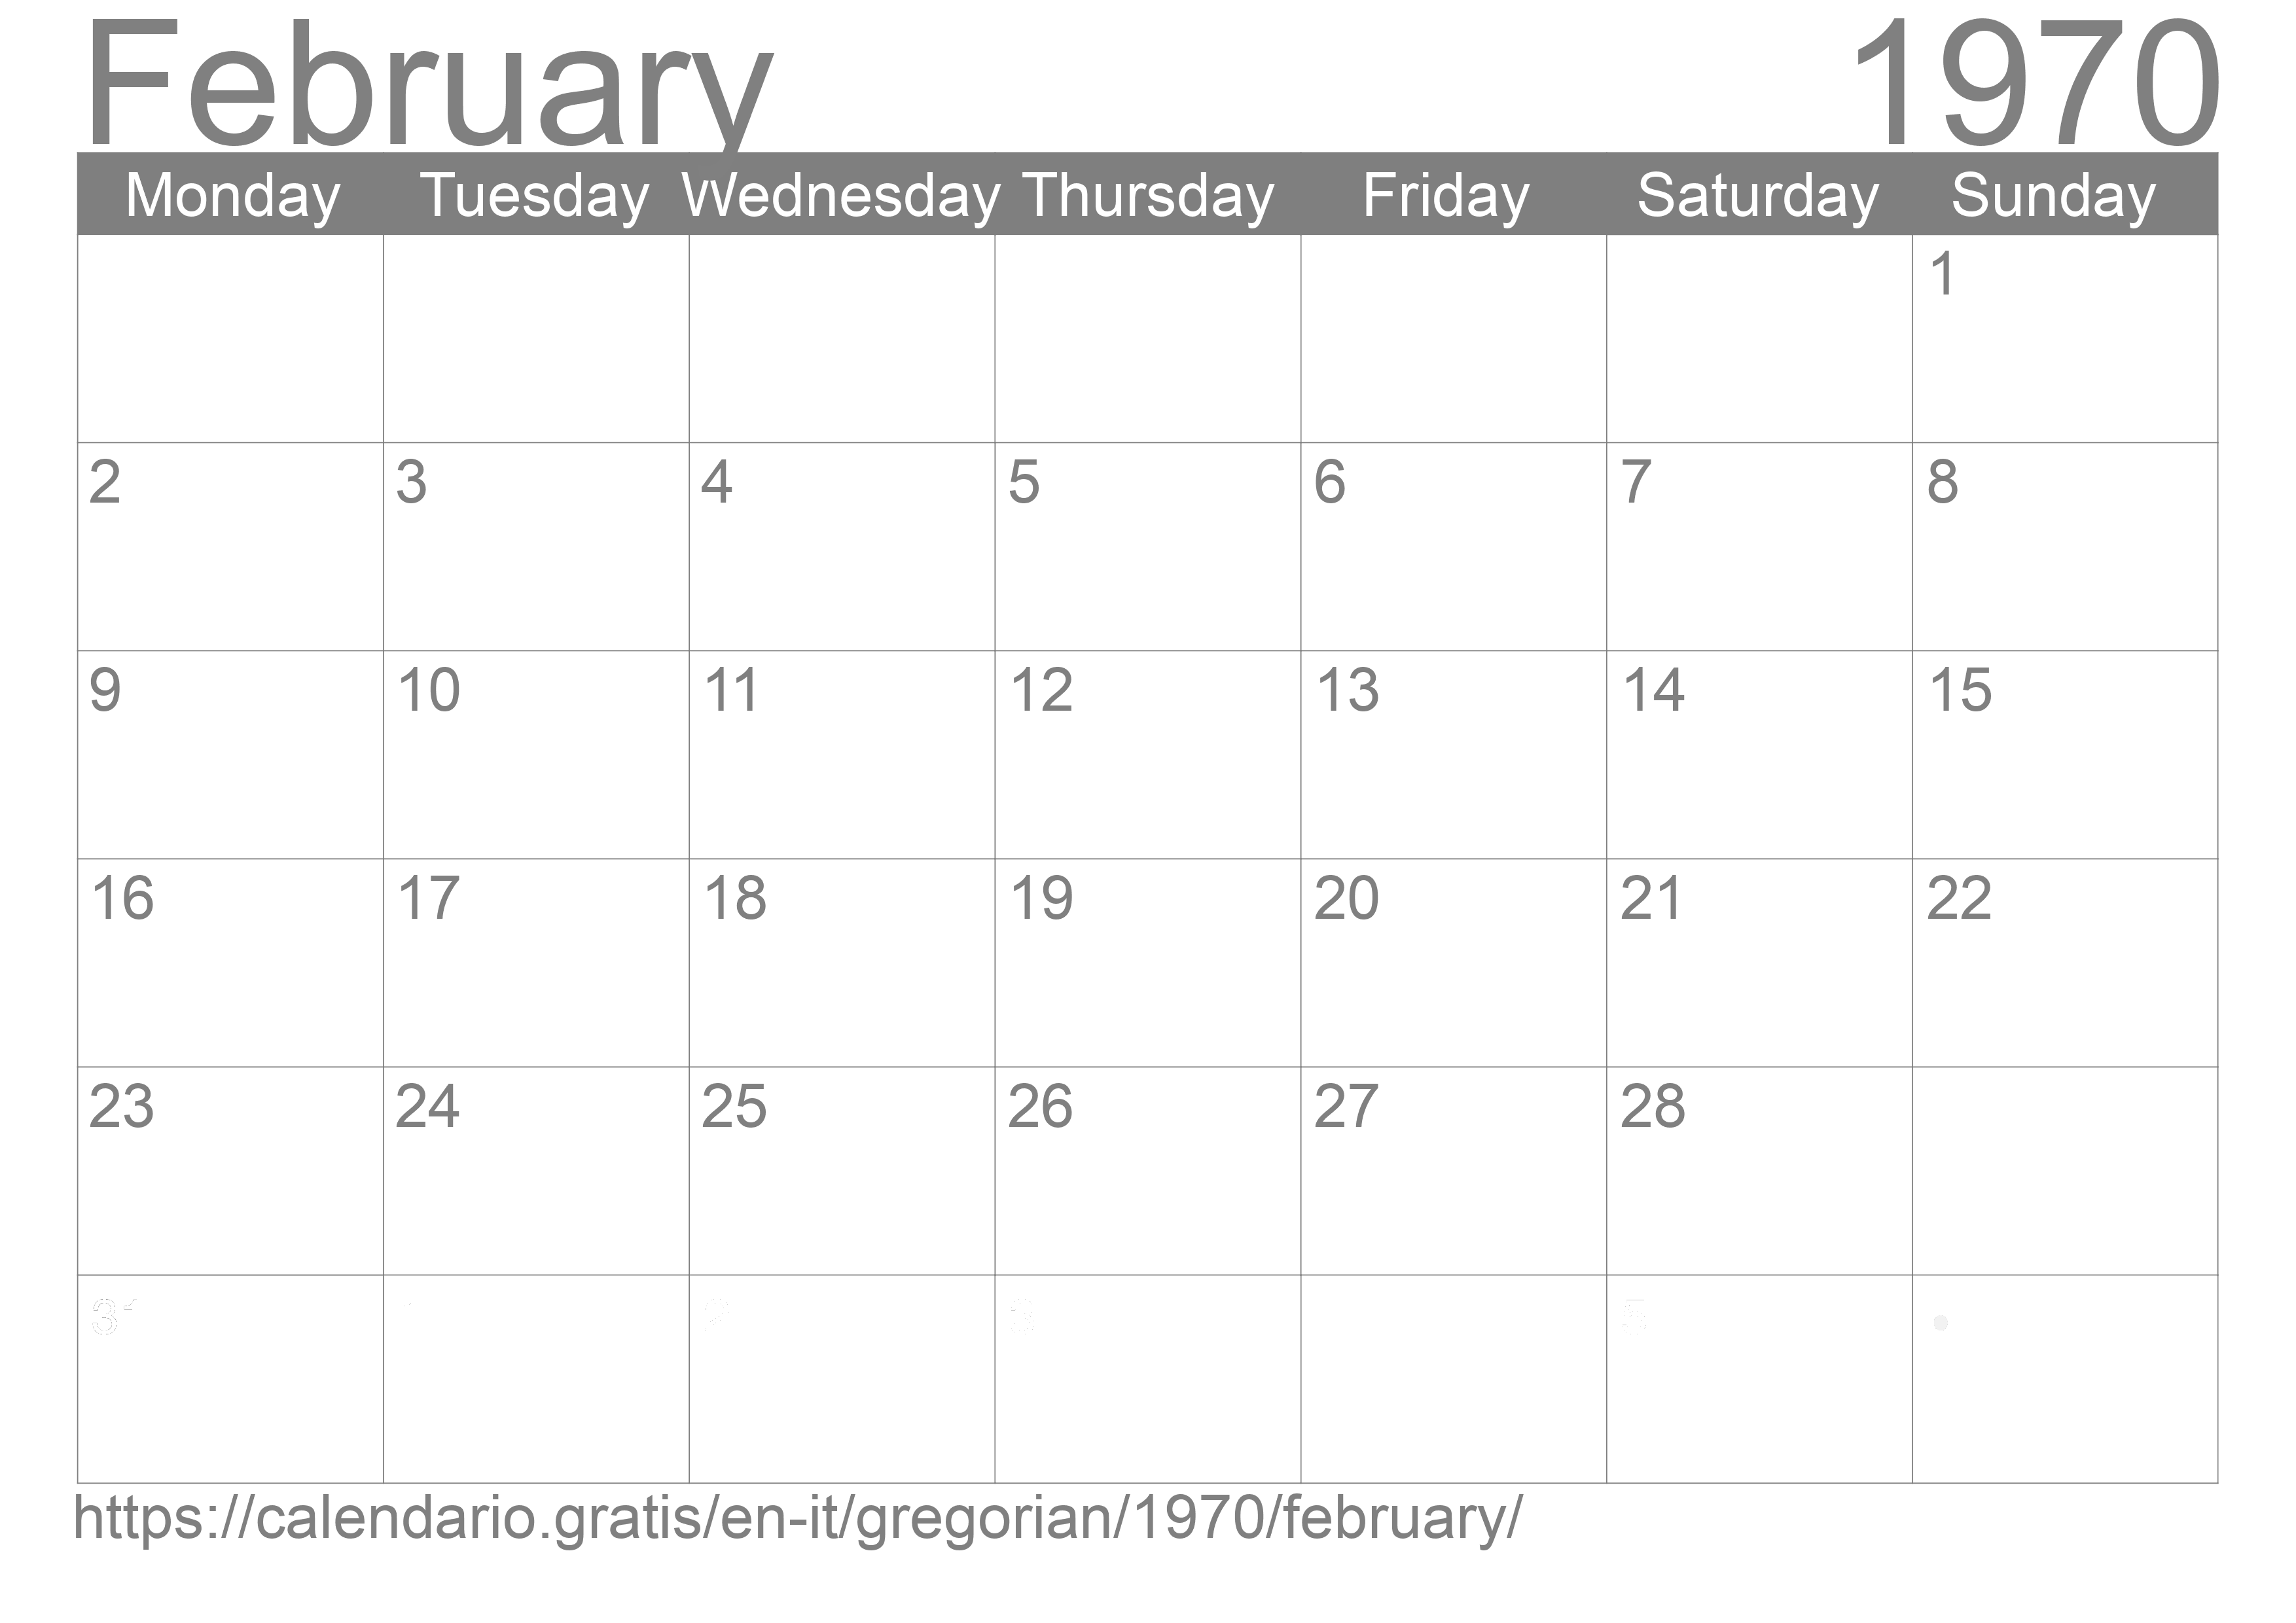 Calendar February 1970 to print